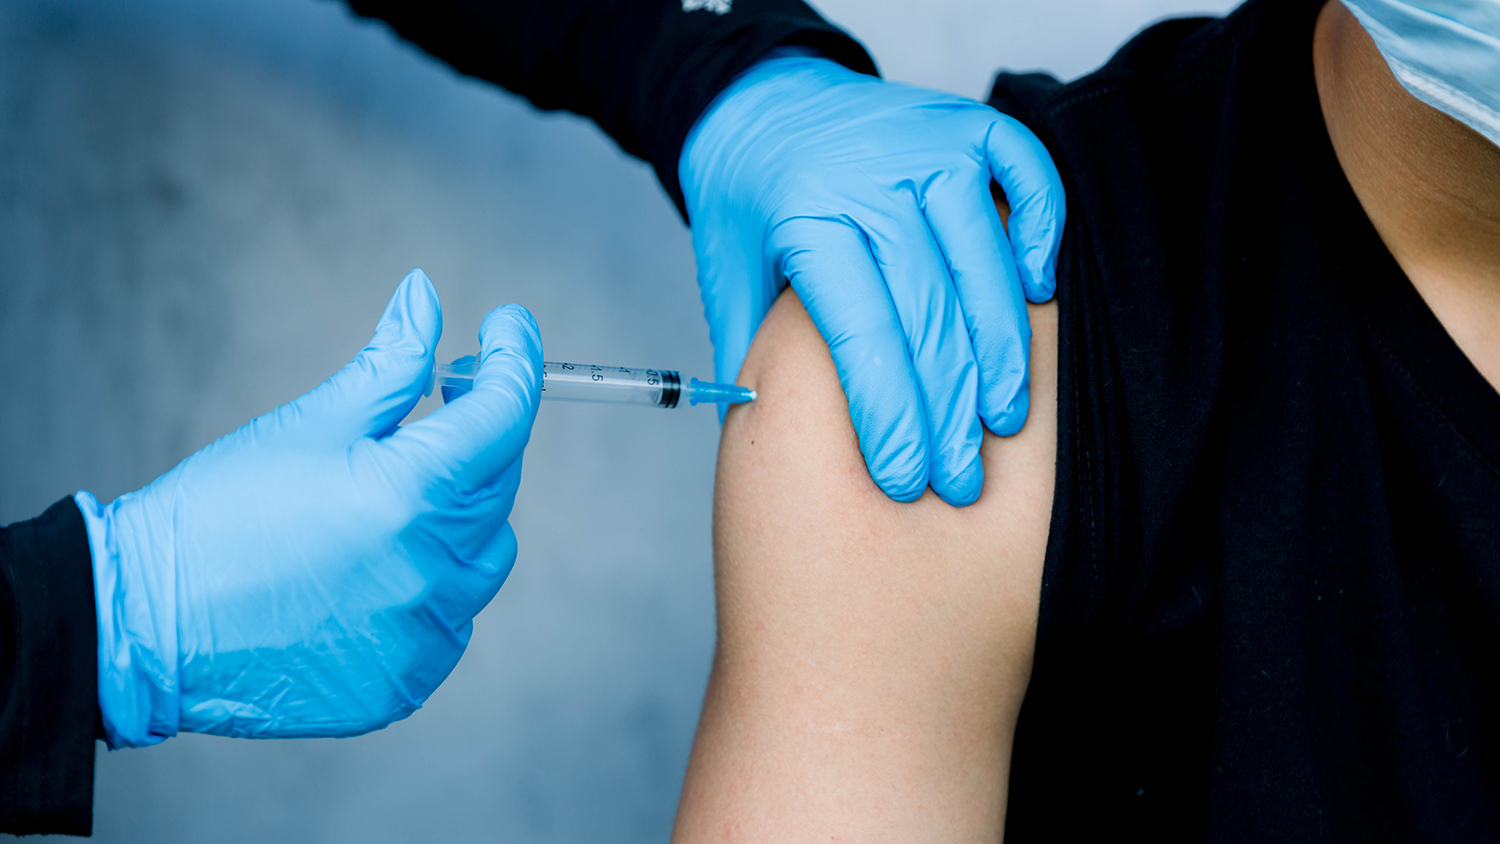 coral springsintramuscular injection vaccine broward county